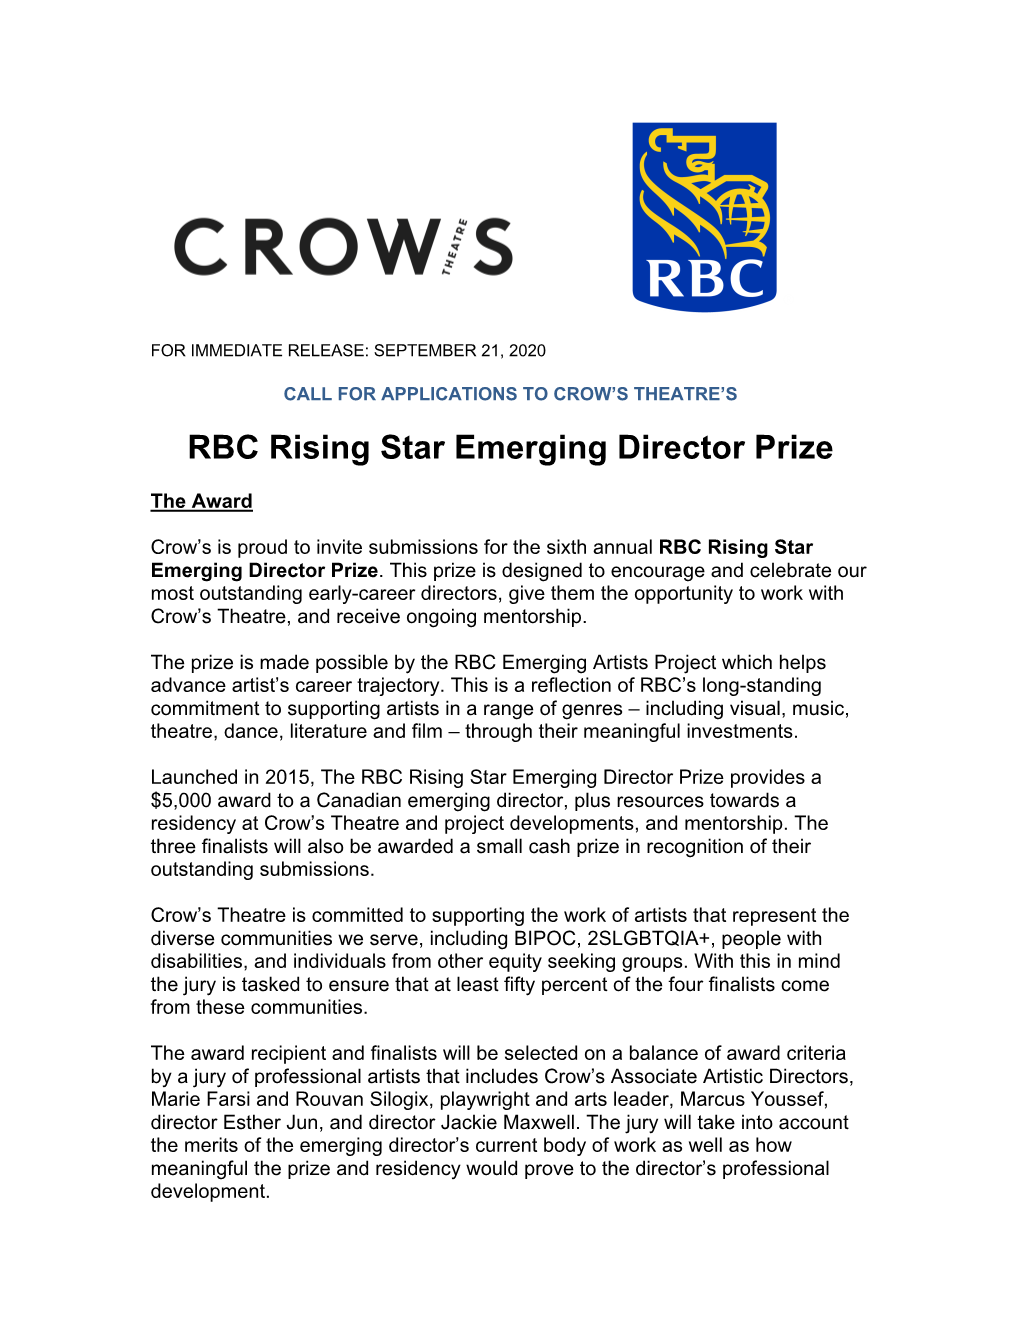 RBC Rising Star Emerging Director Prize